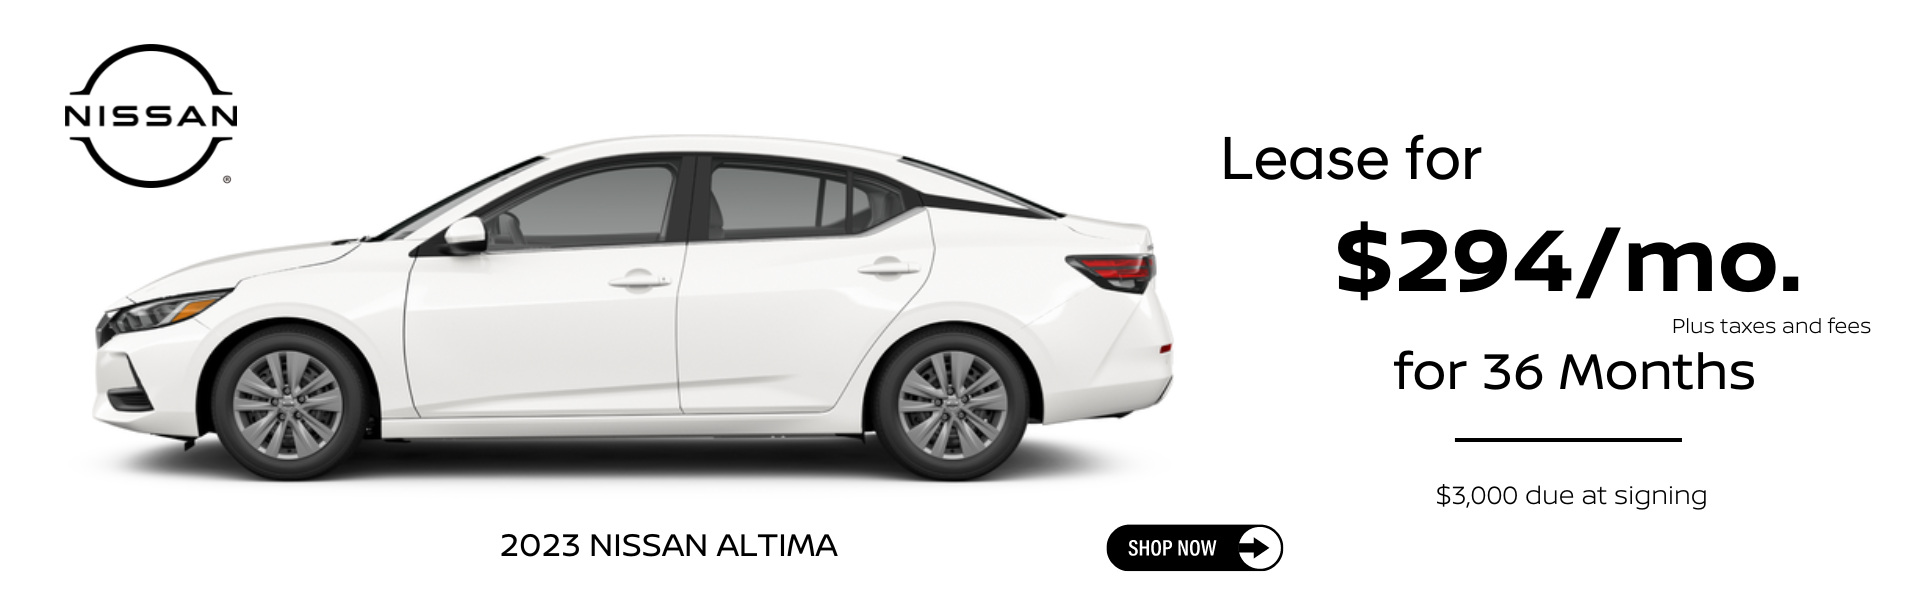 2023 Nissan Altima Specials